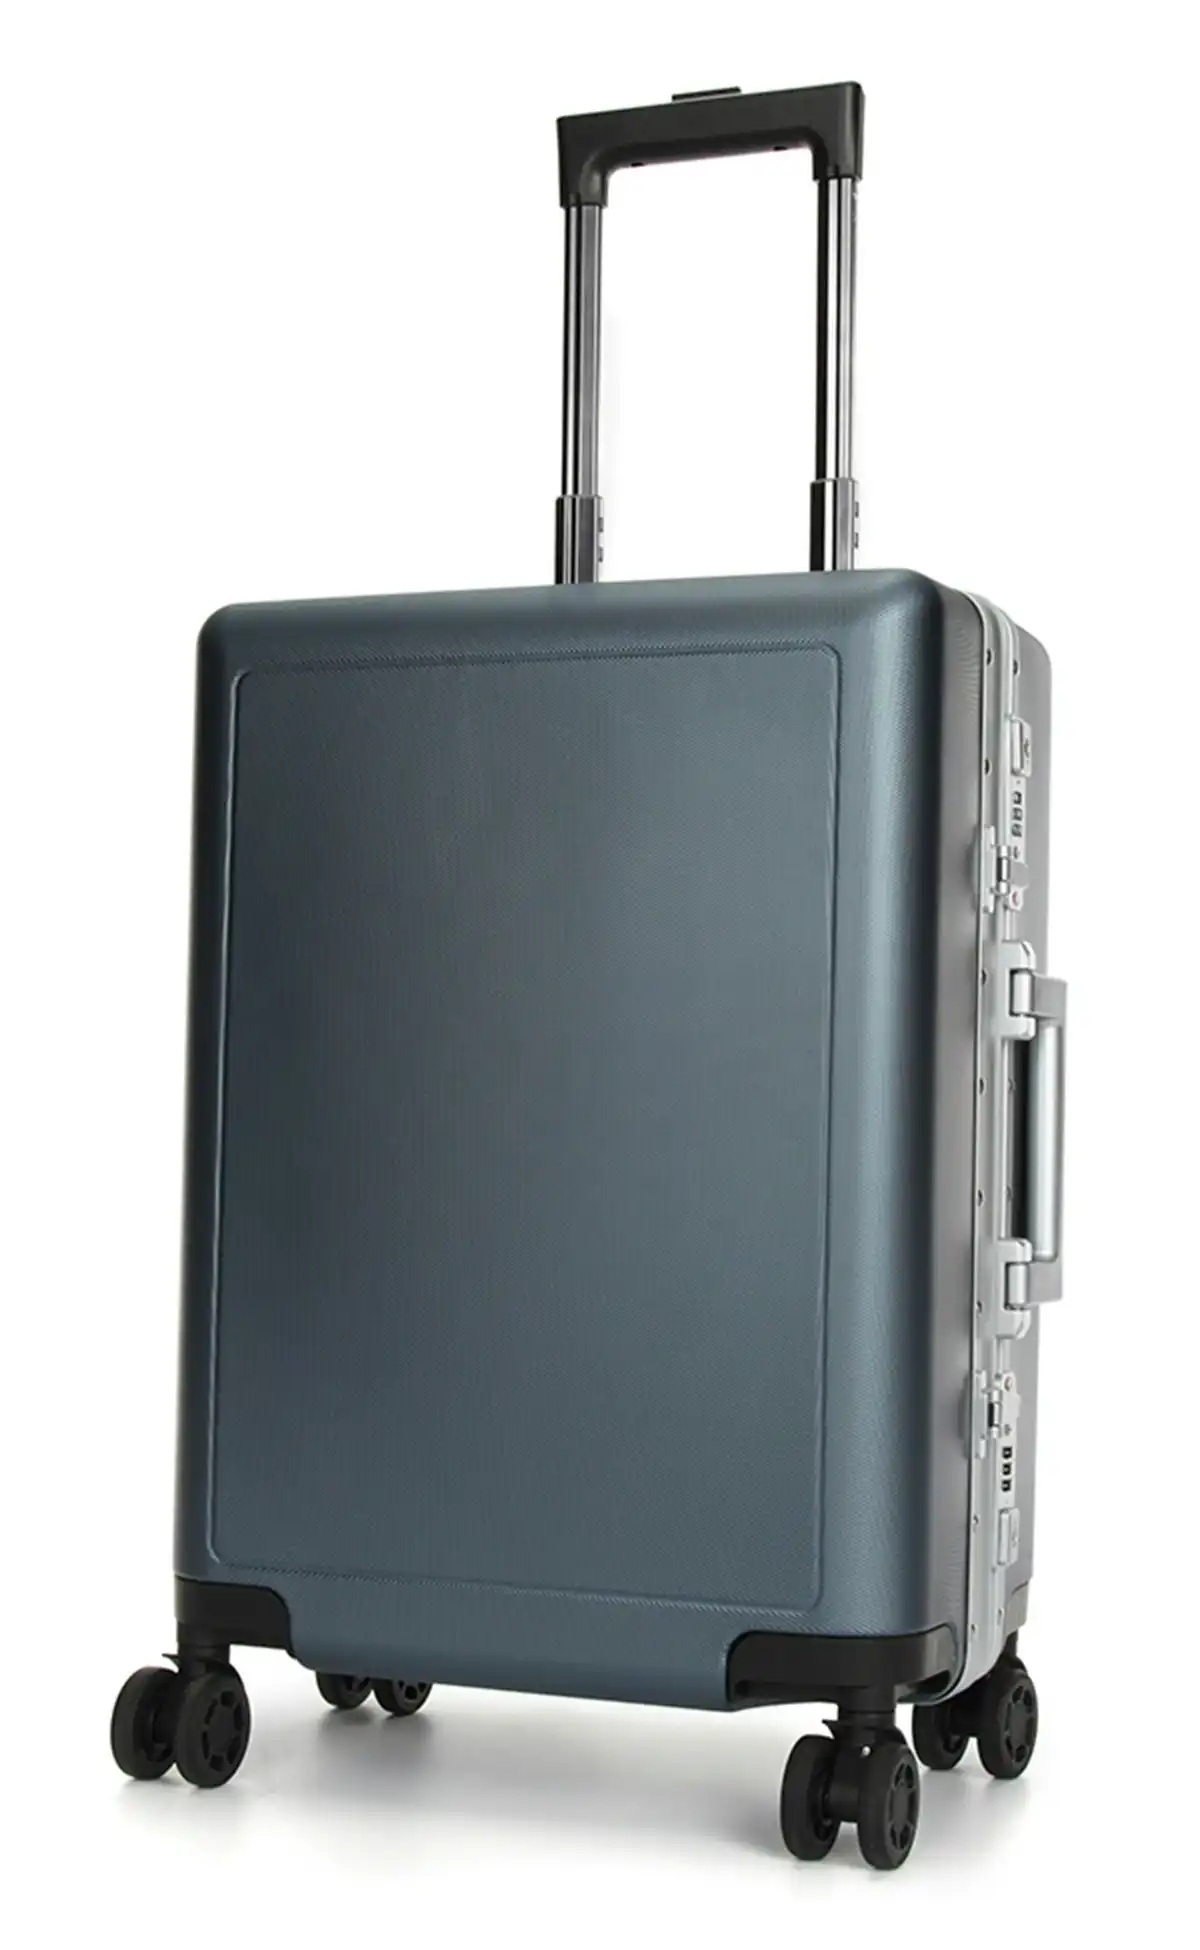 Suissewin Swiss Aluminium Luggage Suitcase Lightweight With TSA Locker 8 Wheels Check in Large Hardcase SN7613C Blue